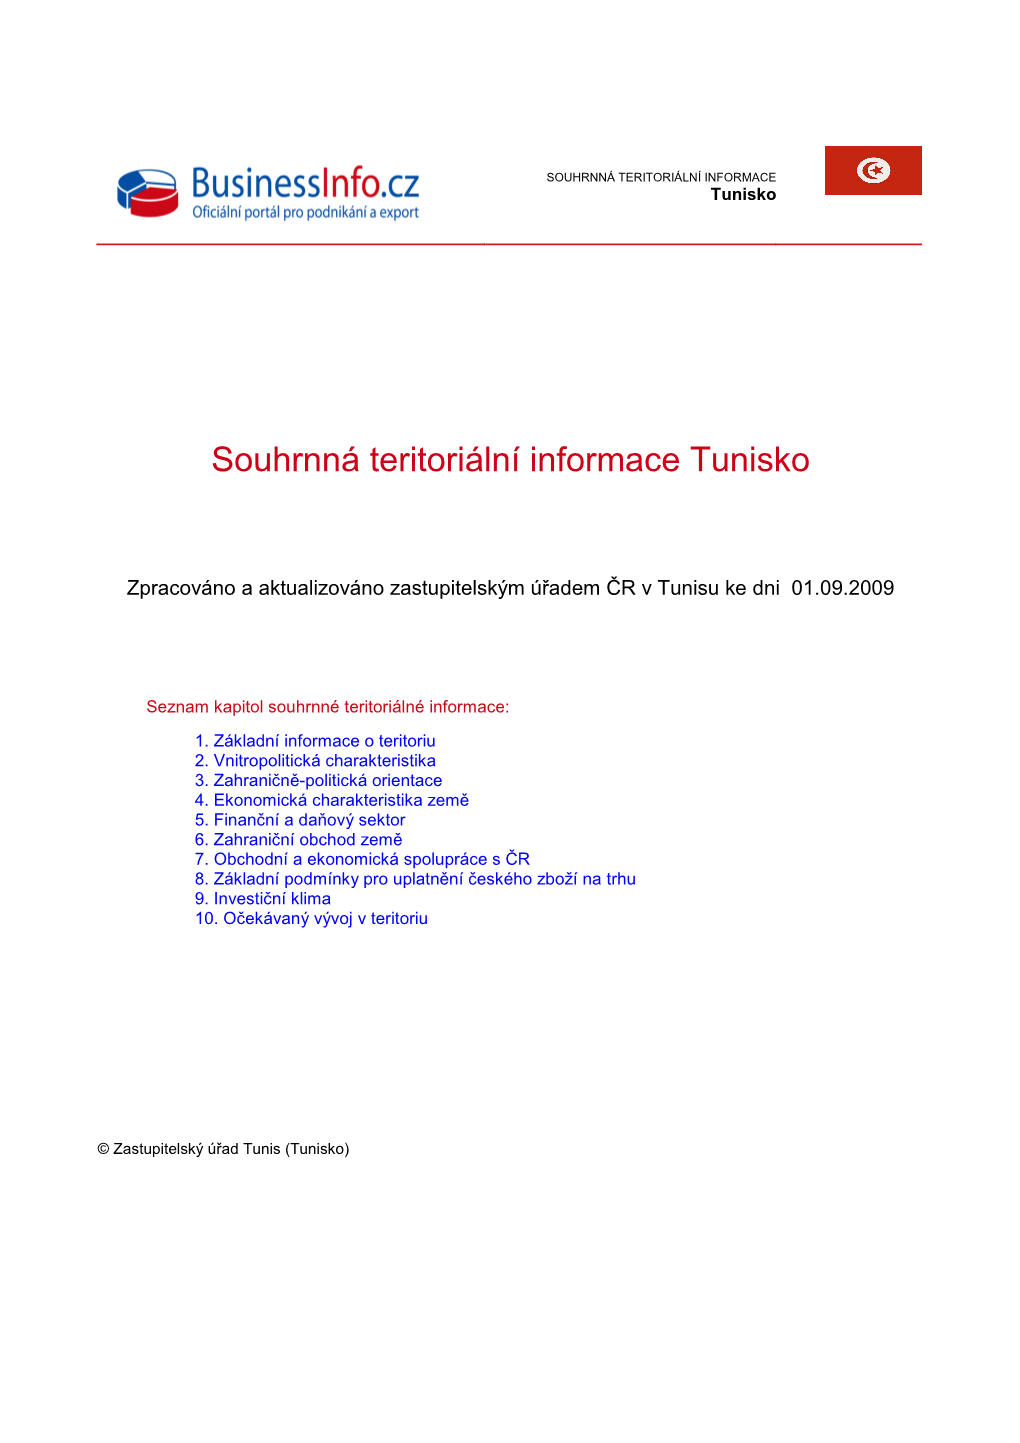 STI Tunis Aktualizace K 1.9.2009